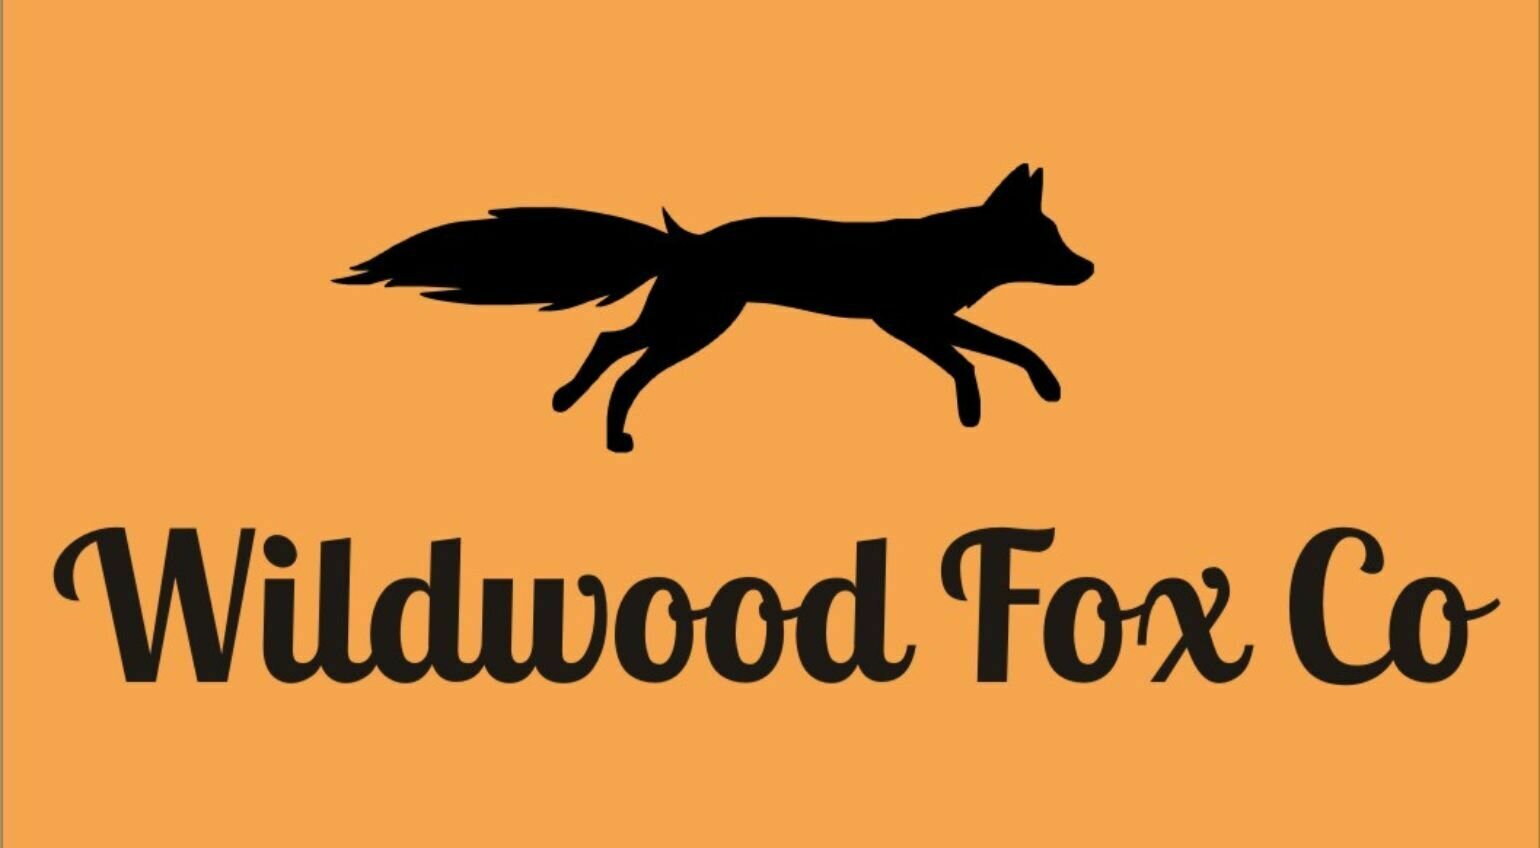 Wildwood Fox Co 